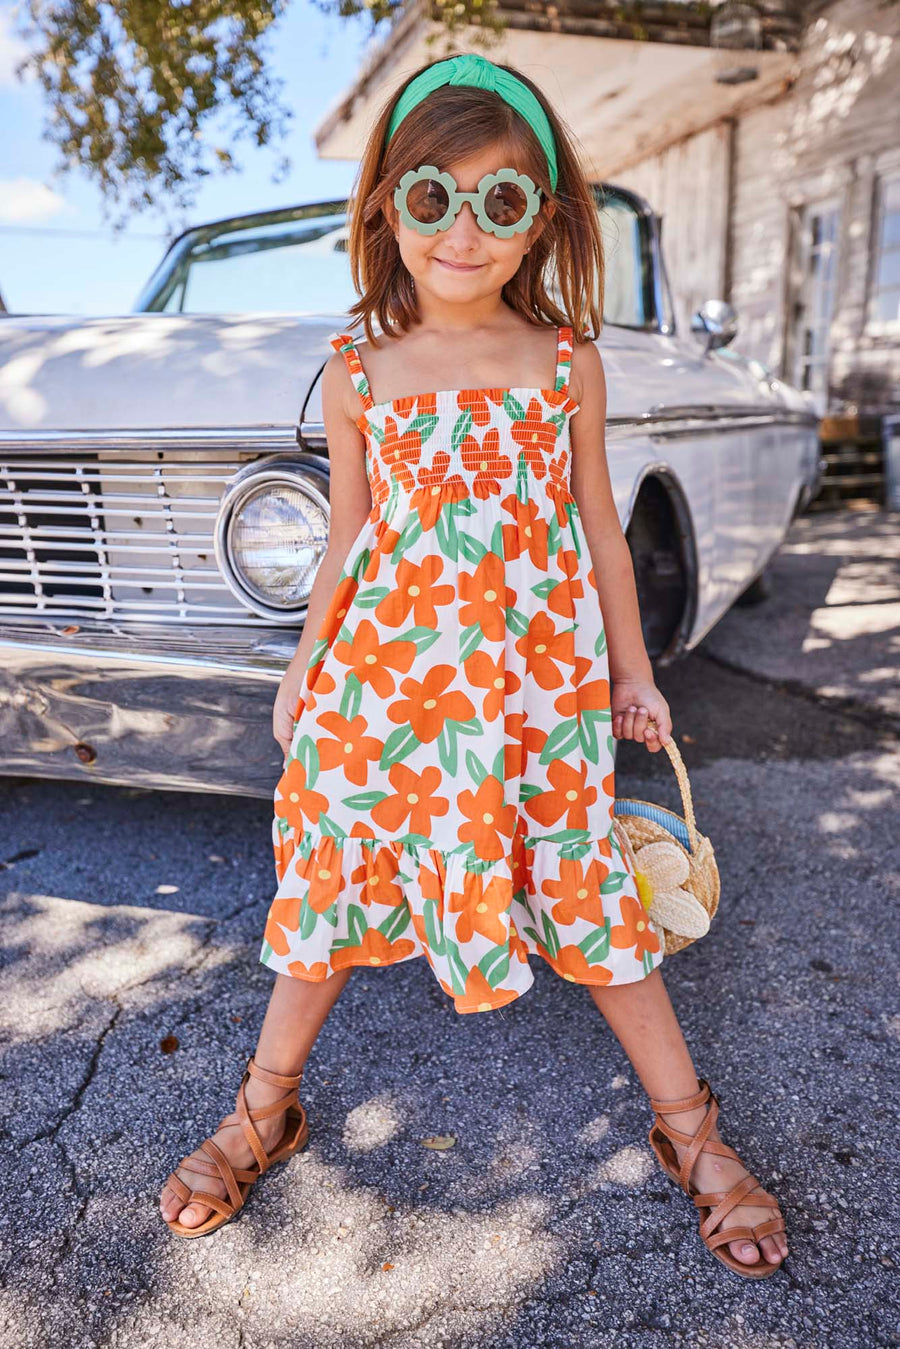 tween girls strappy dress with orange large flower print